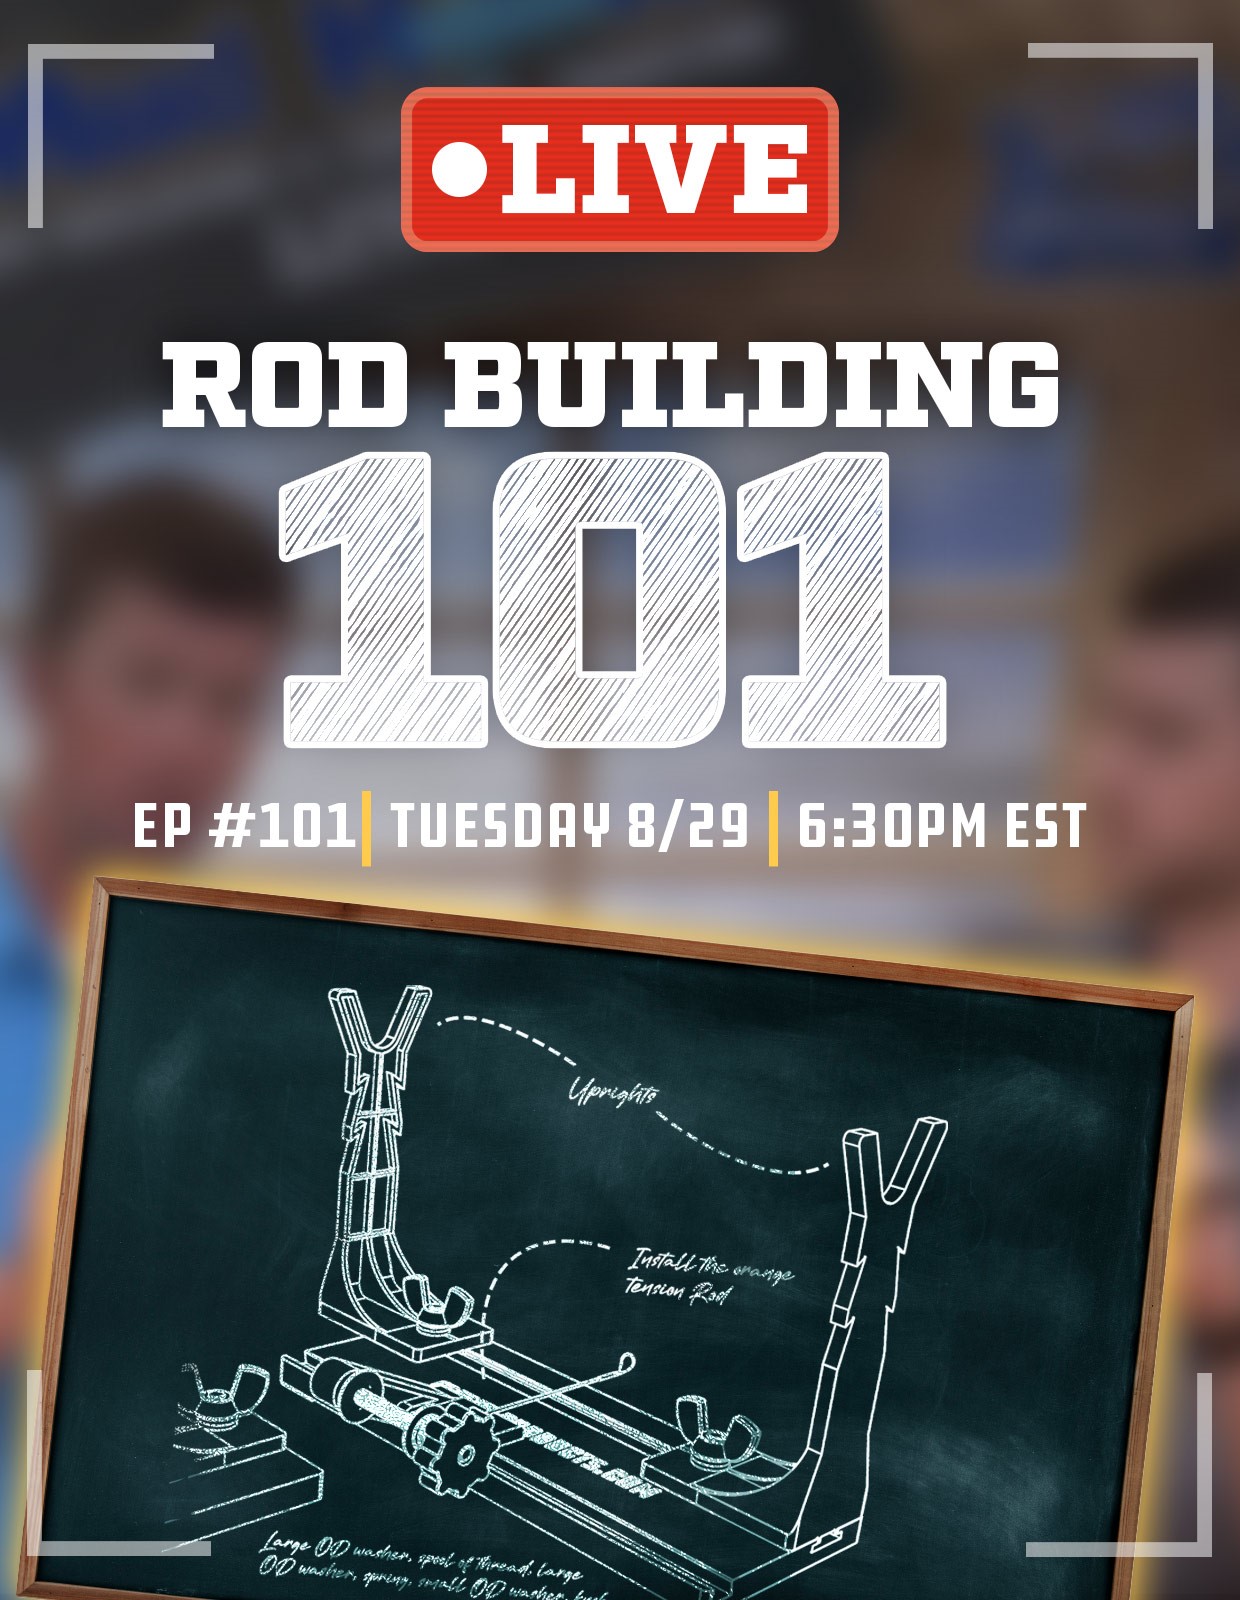 TONIGHT! Catch Mud Hole Live Rod Building 101